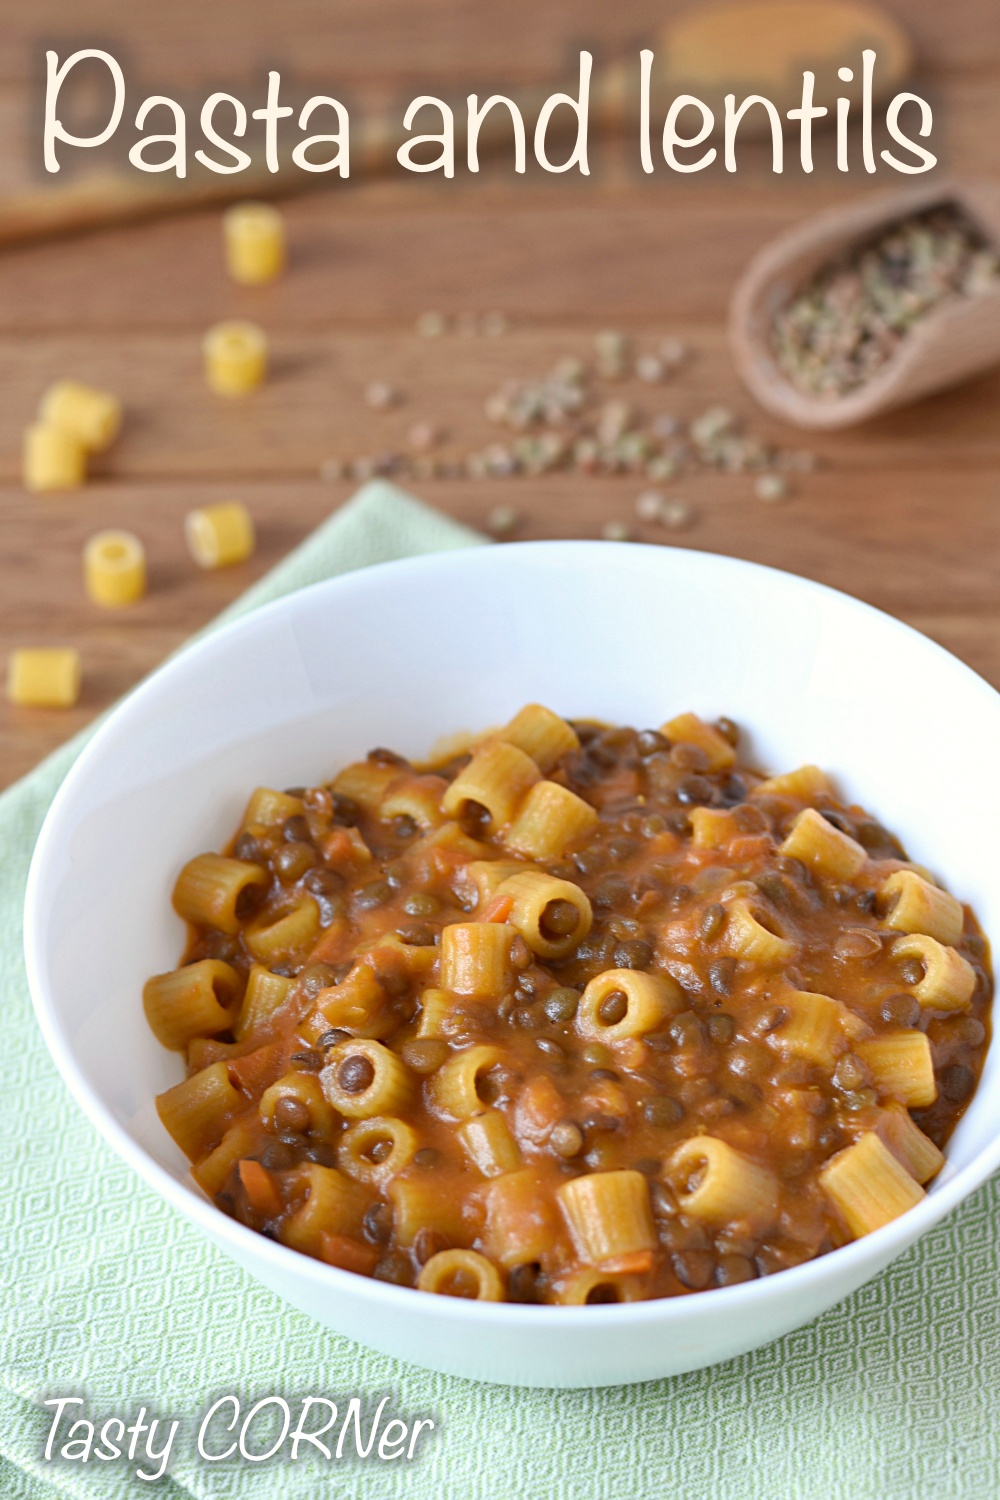 en_v_ Italian pasta and lentils soup authentic italian recipe one pot vegetarian by tasty corner blog